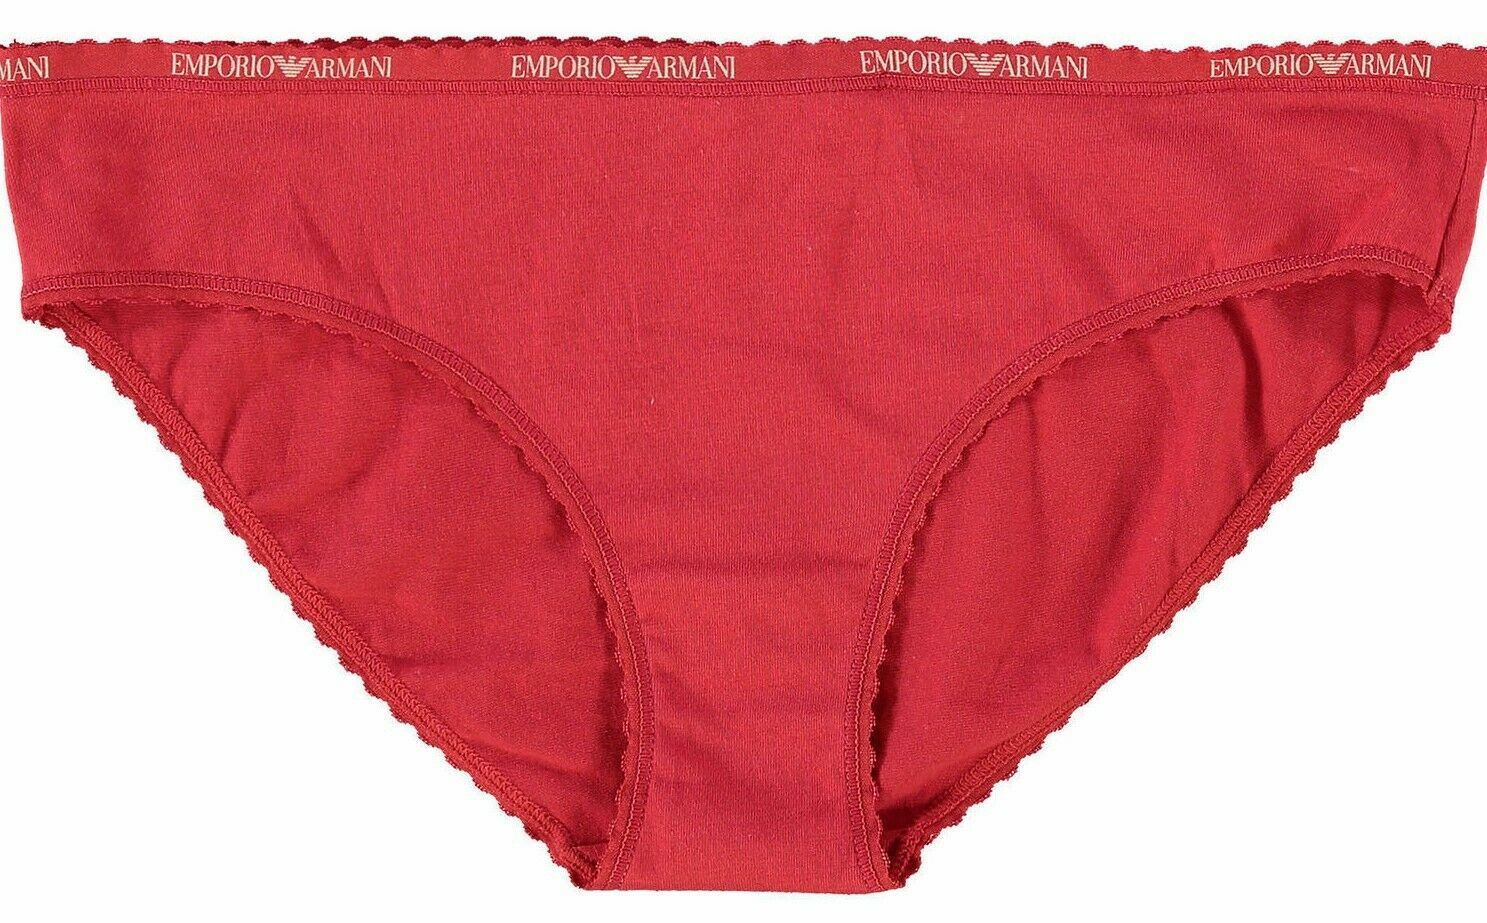 EMPORIO ARMANI Underwear Women's Cotton Knickers, Briefs, Red, size S